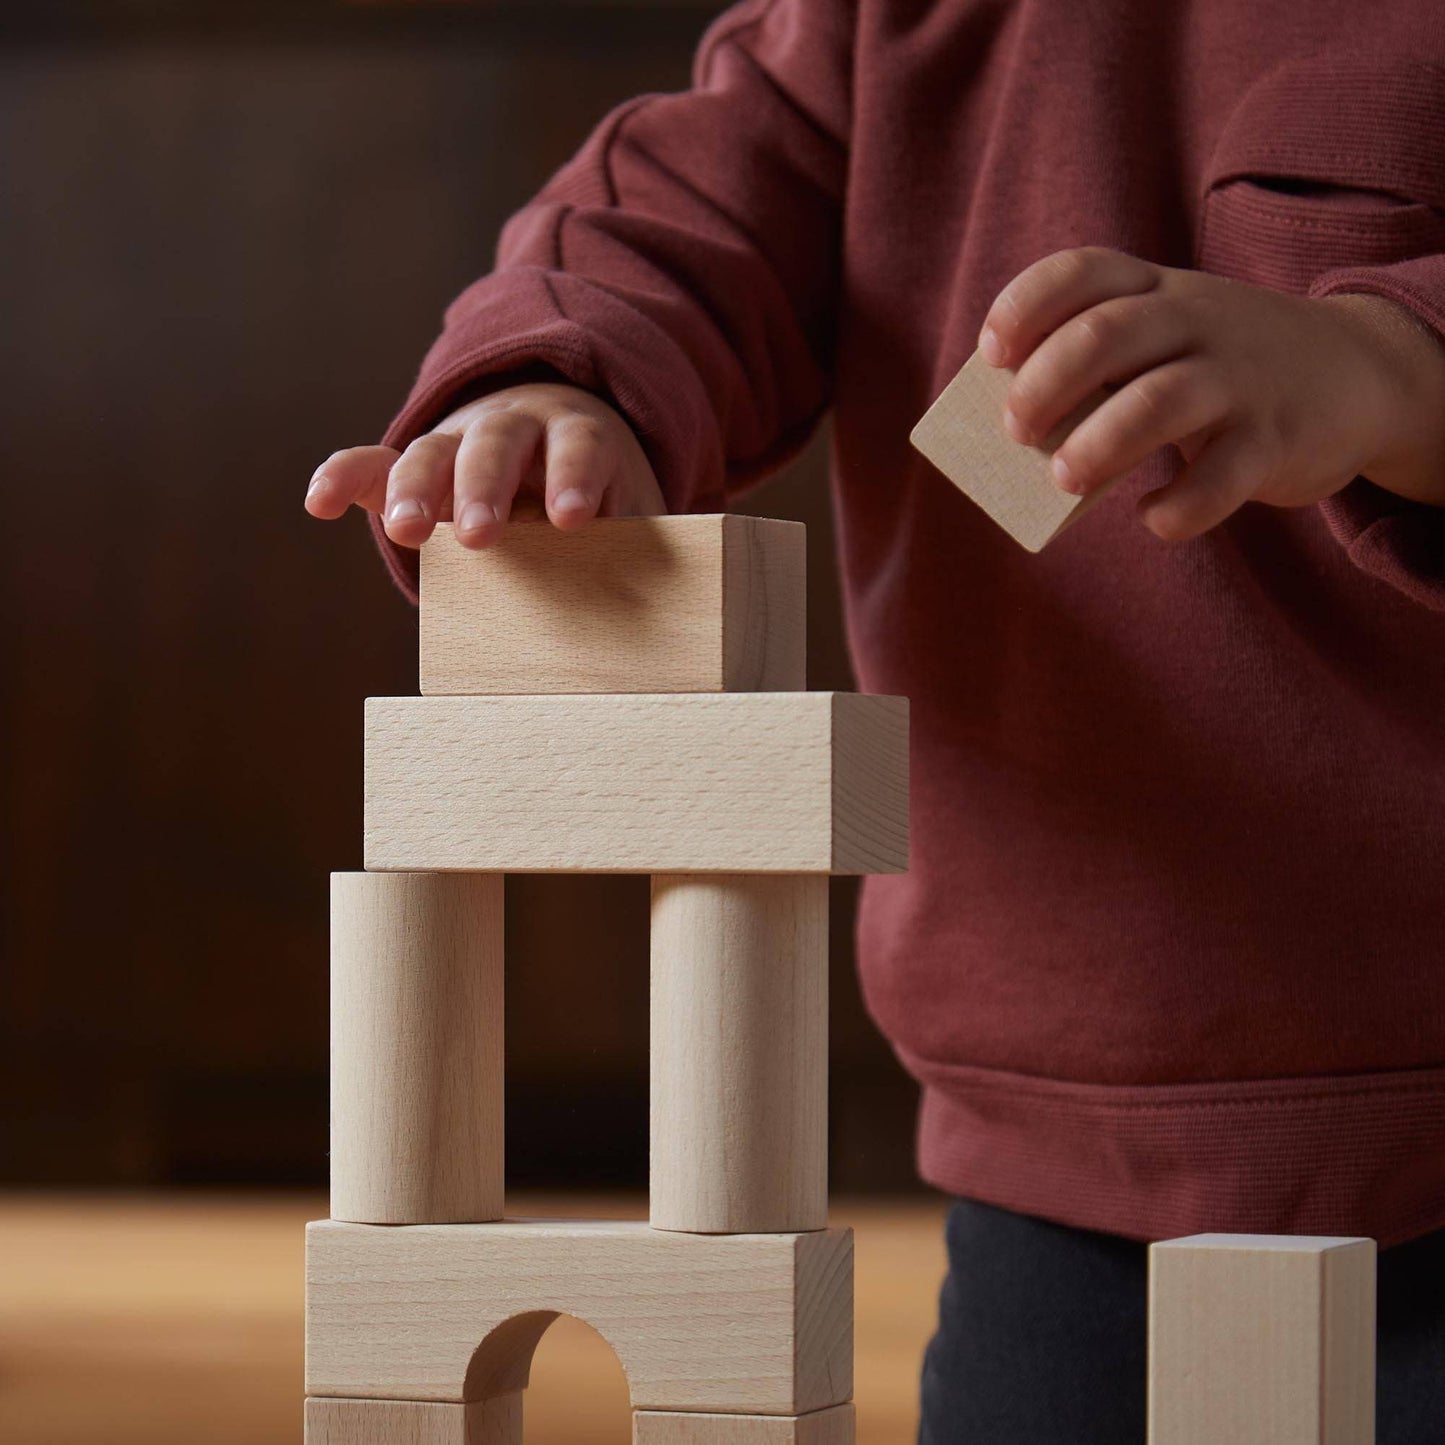 Toddler Basic Building Blocks 26 Piece Starter Set by Haba